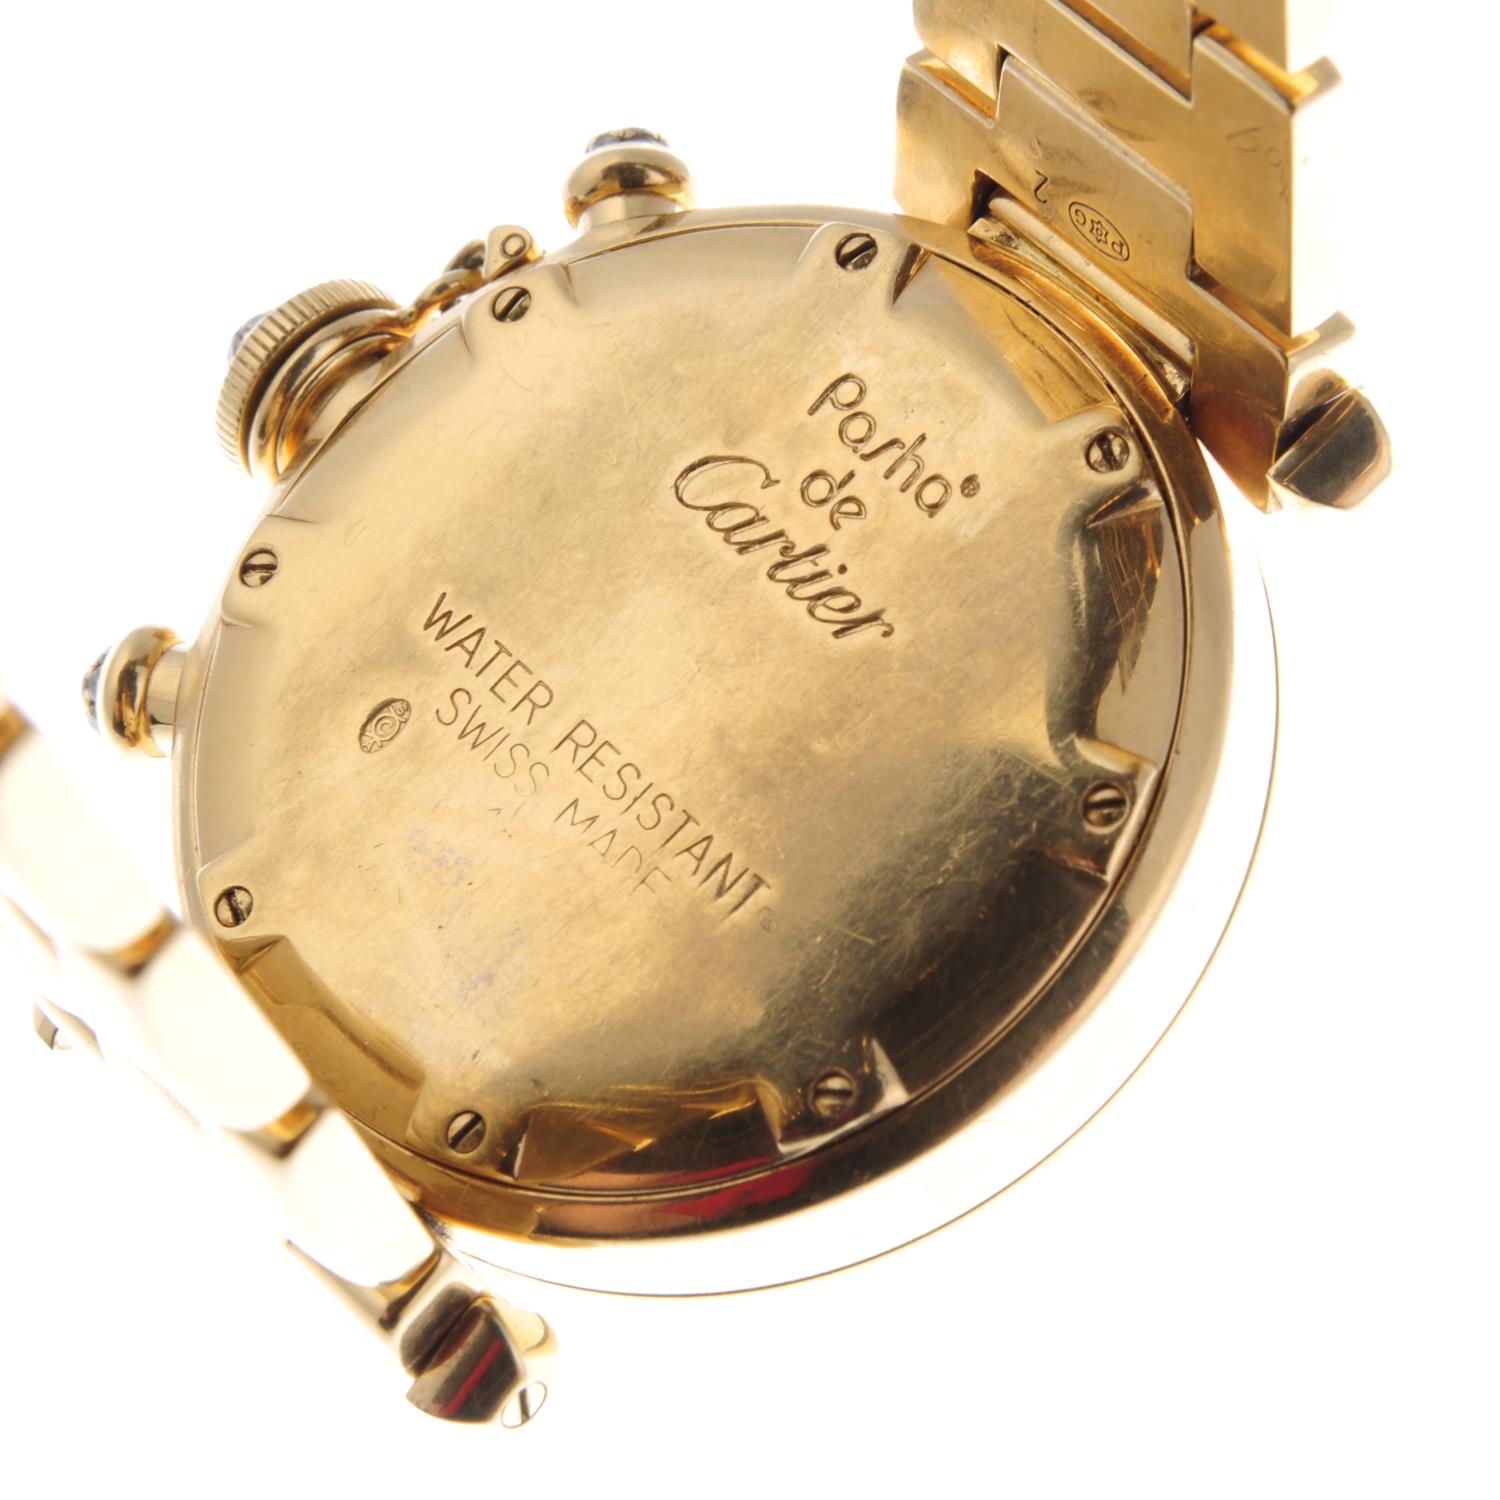 CARTIER - a Pasha chronograph bracelet watch. - Image 5 of 7